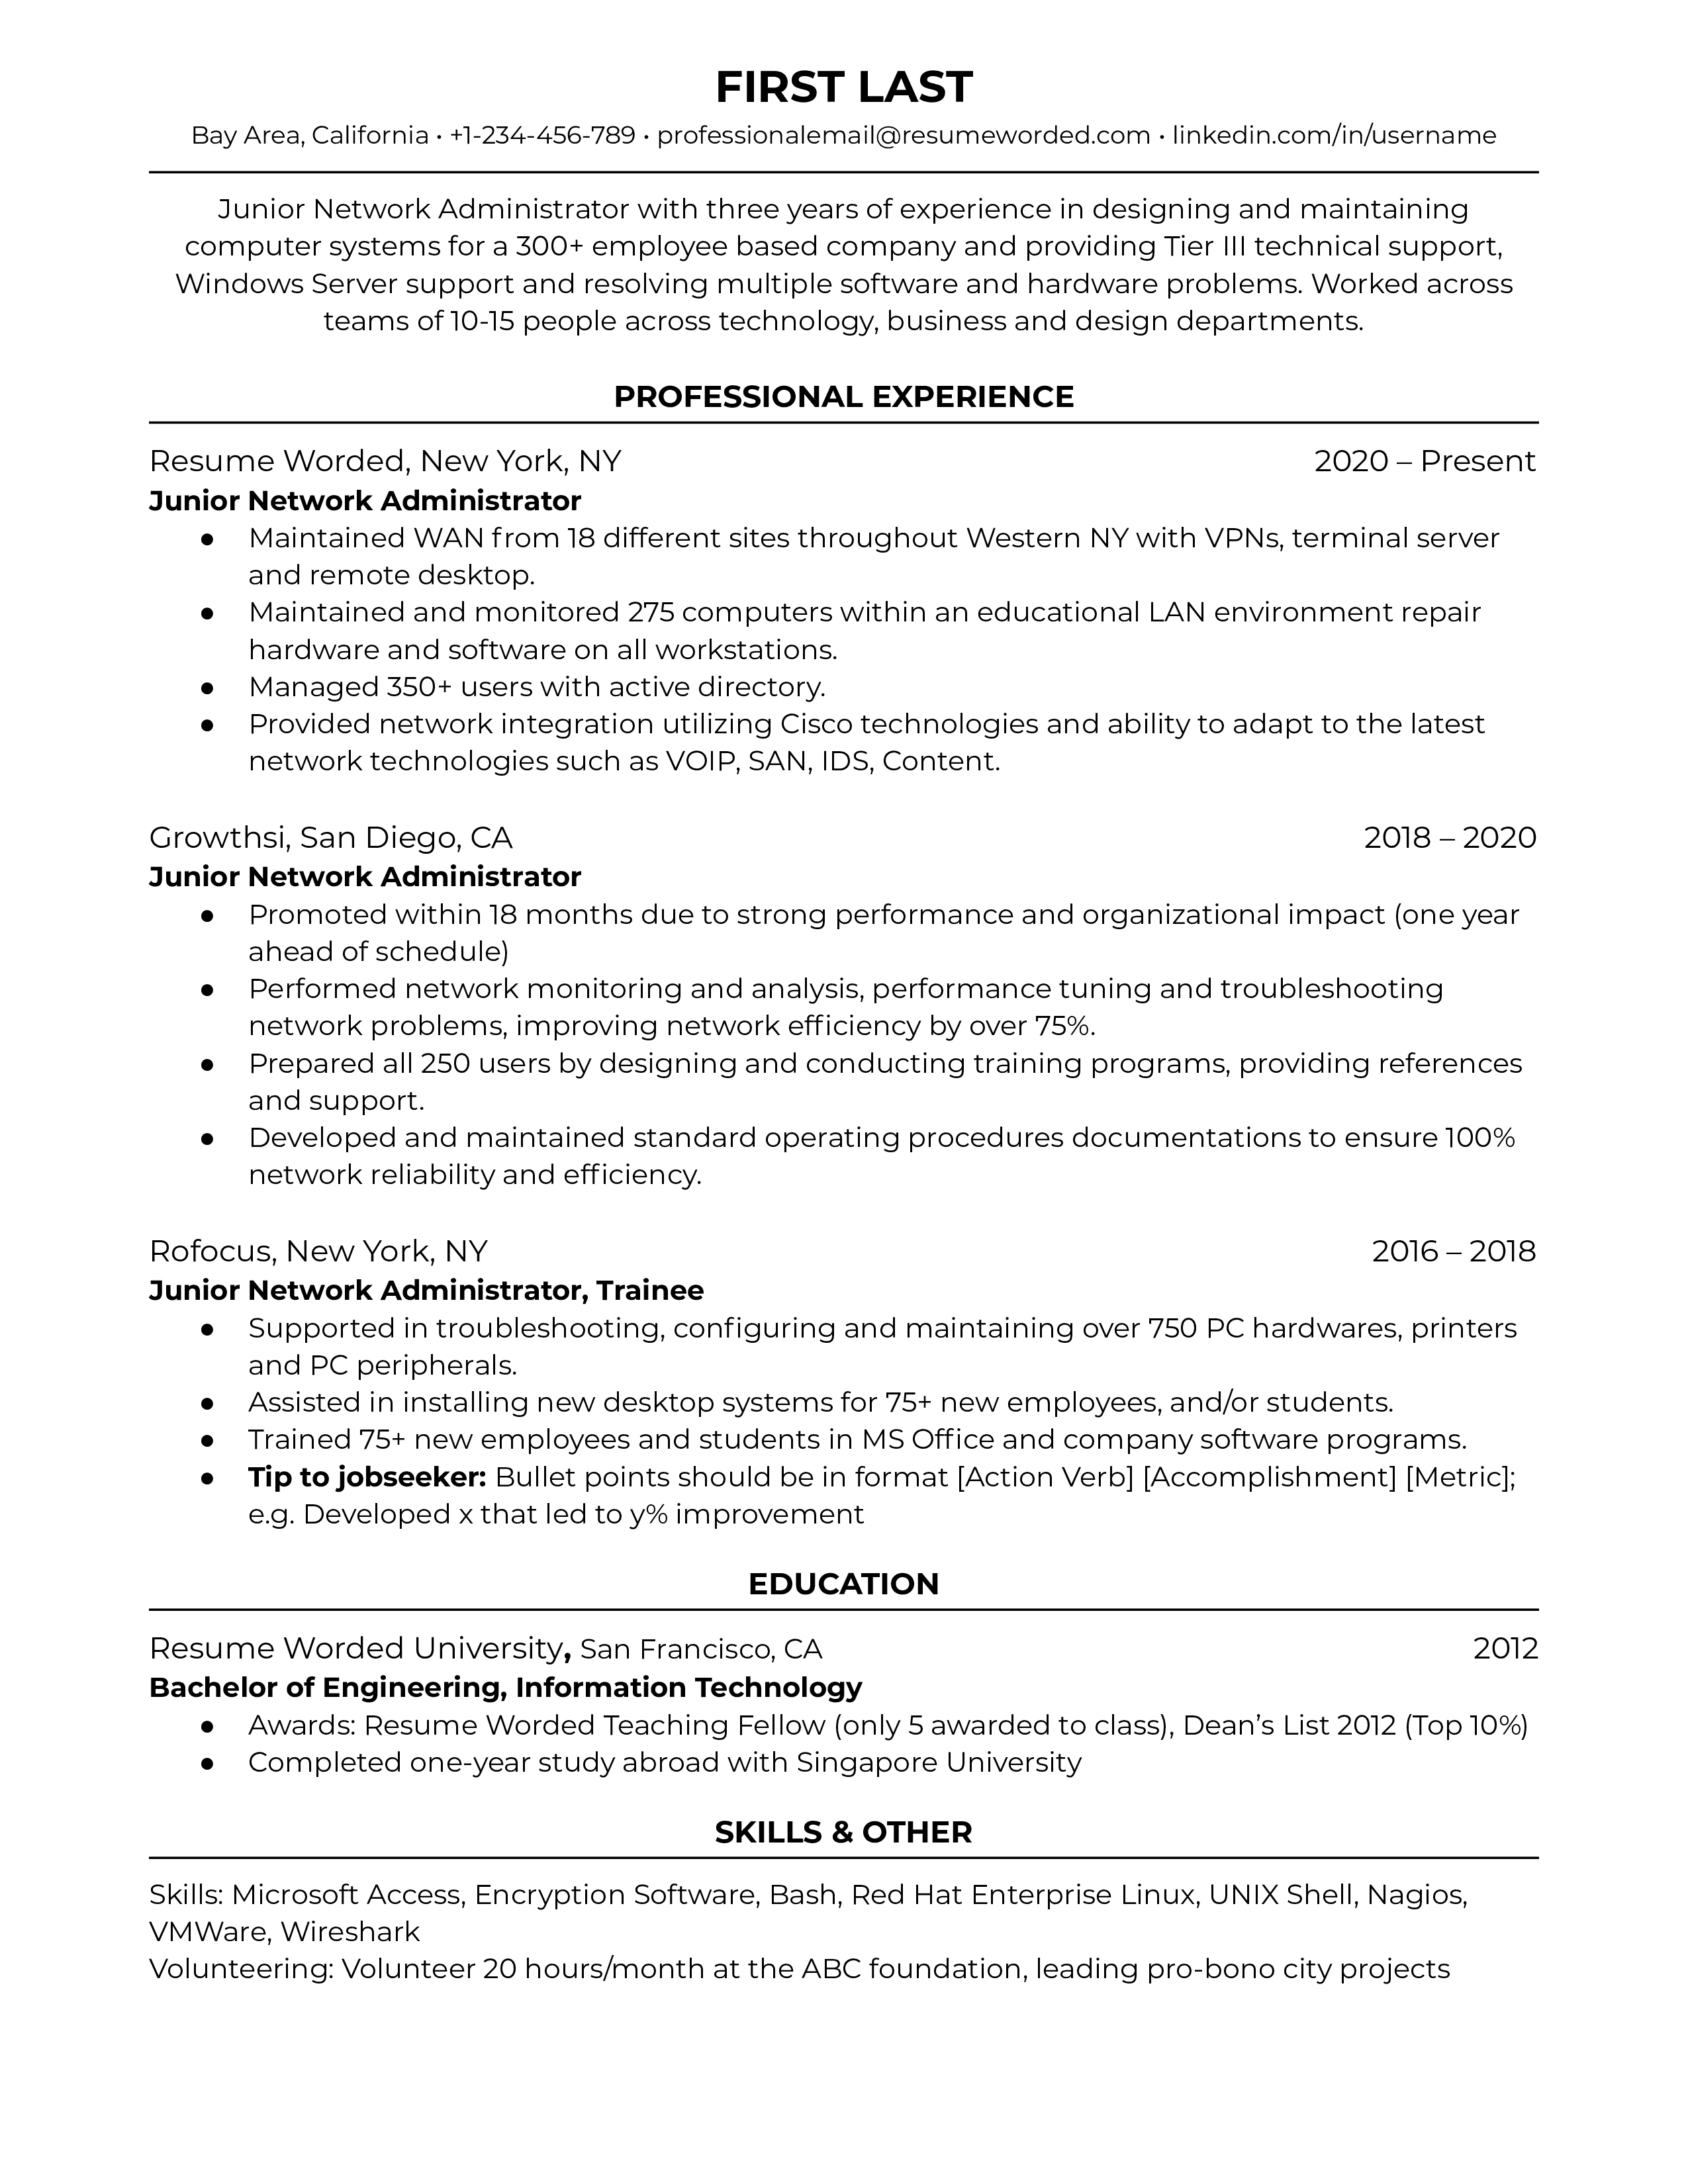 Junior Network Administrator Resume Template + Example